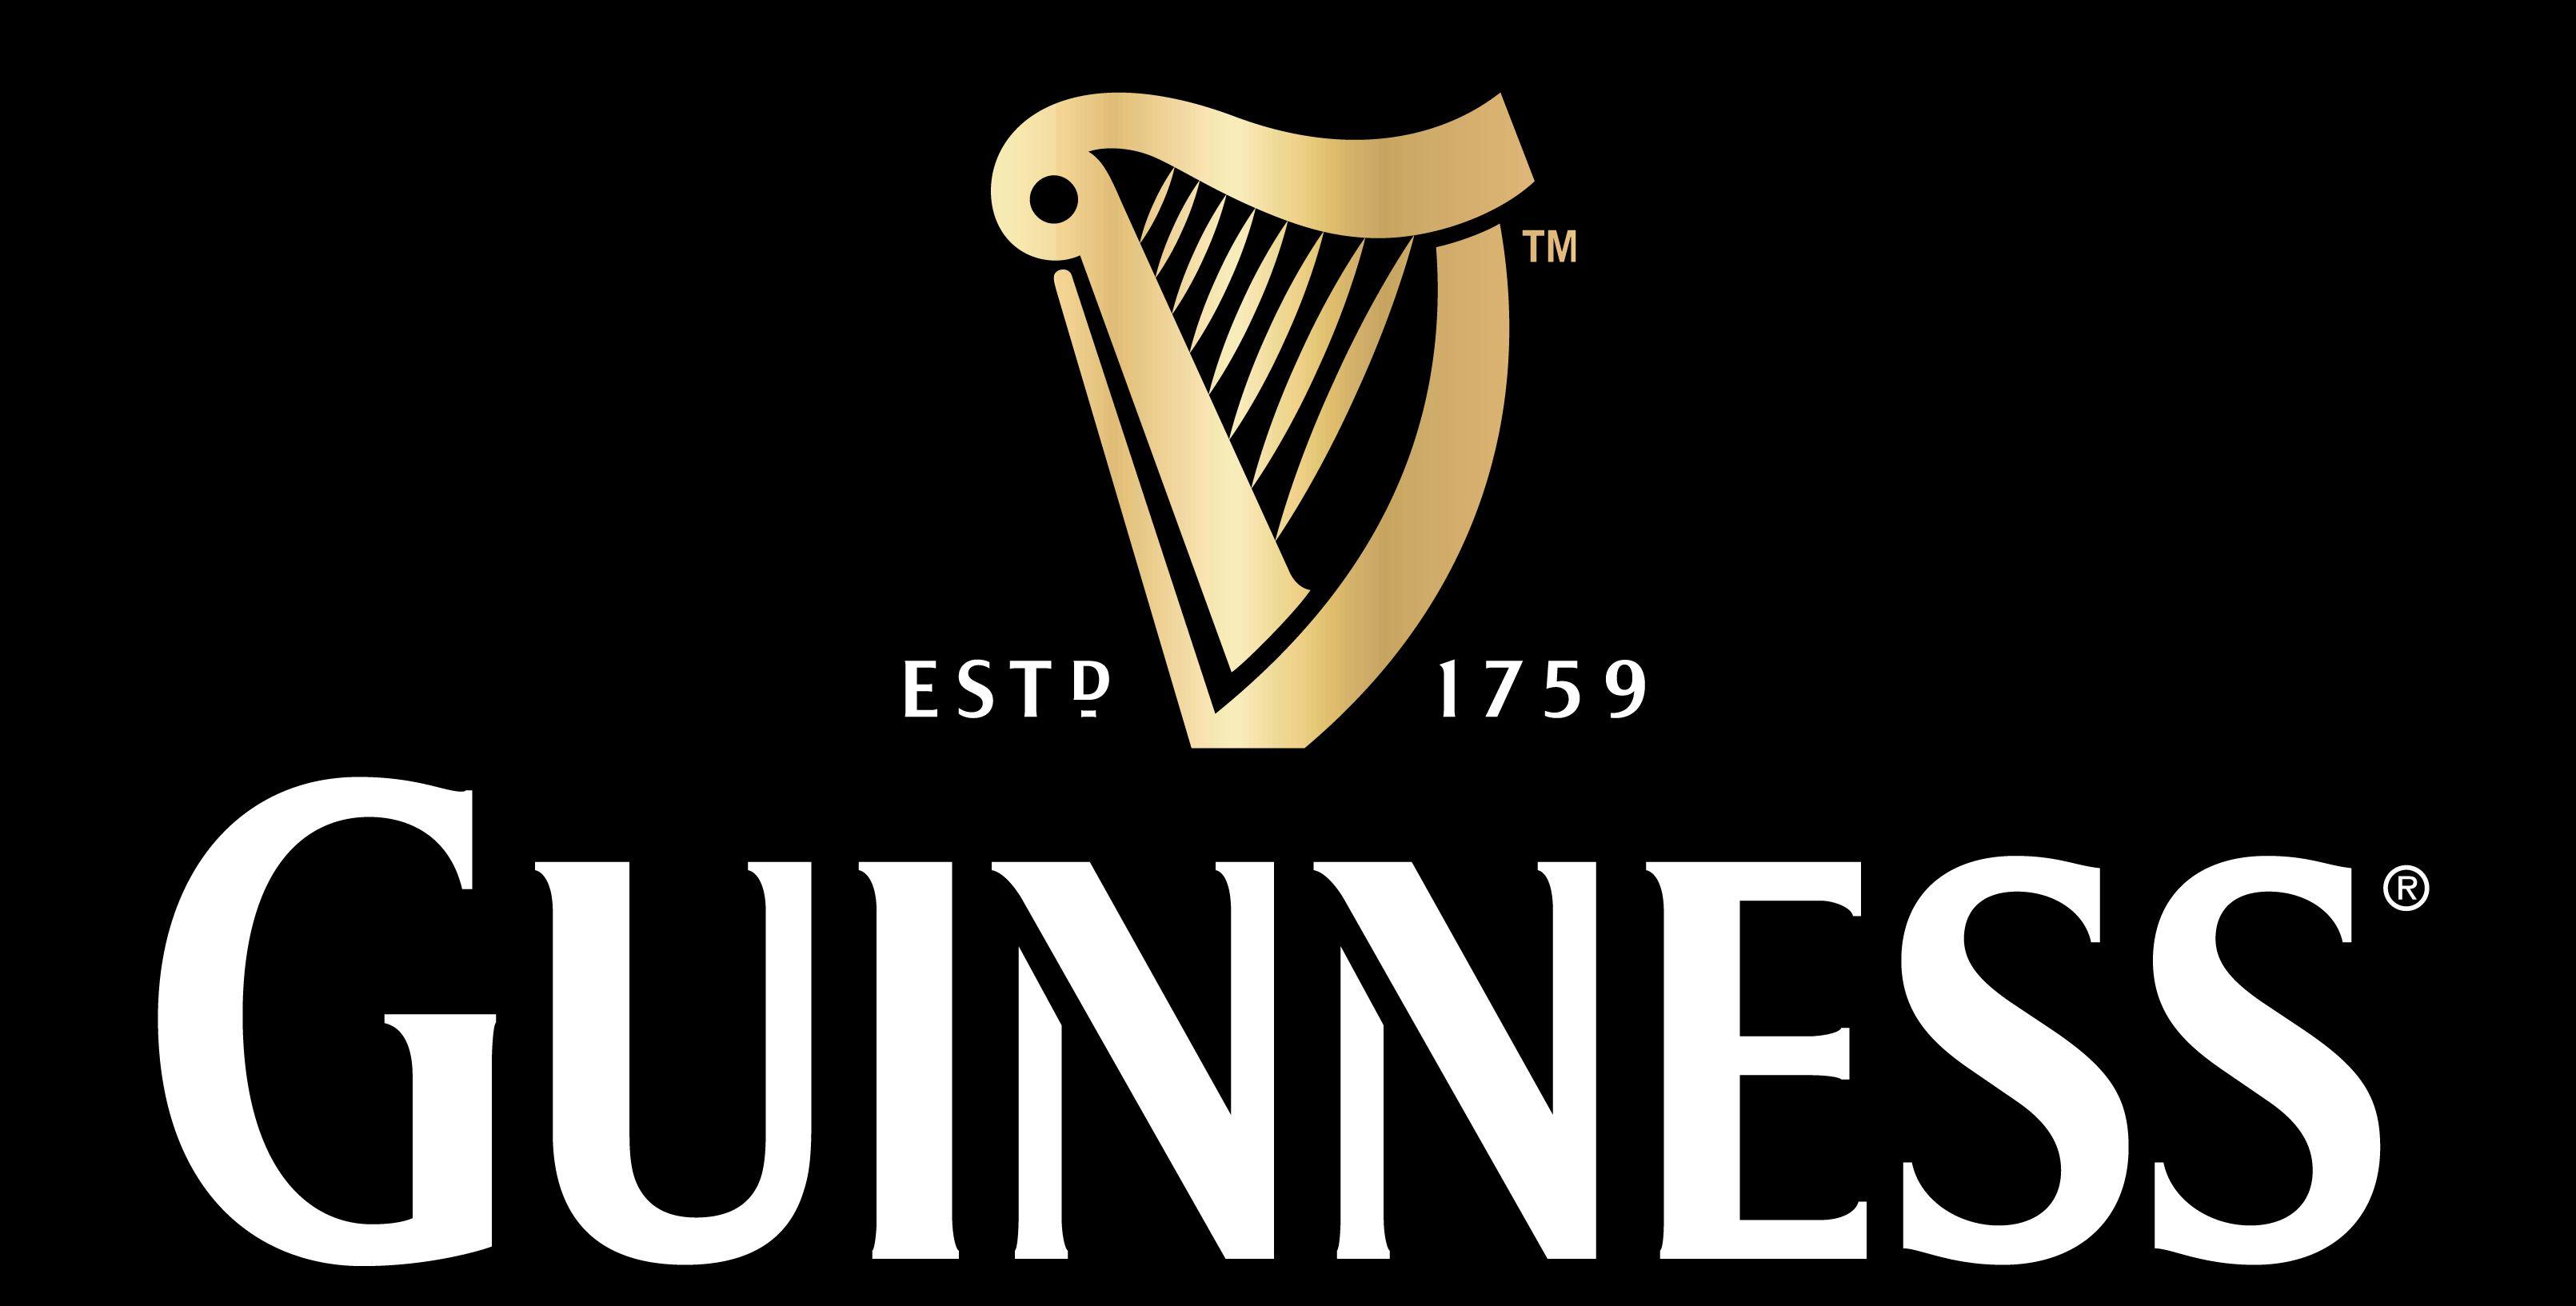 Alcohol Brand Logo - Guinness Nigeria Becomes Nigeria's First Total Alcohol Beverage